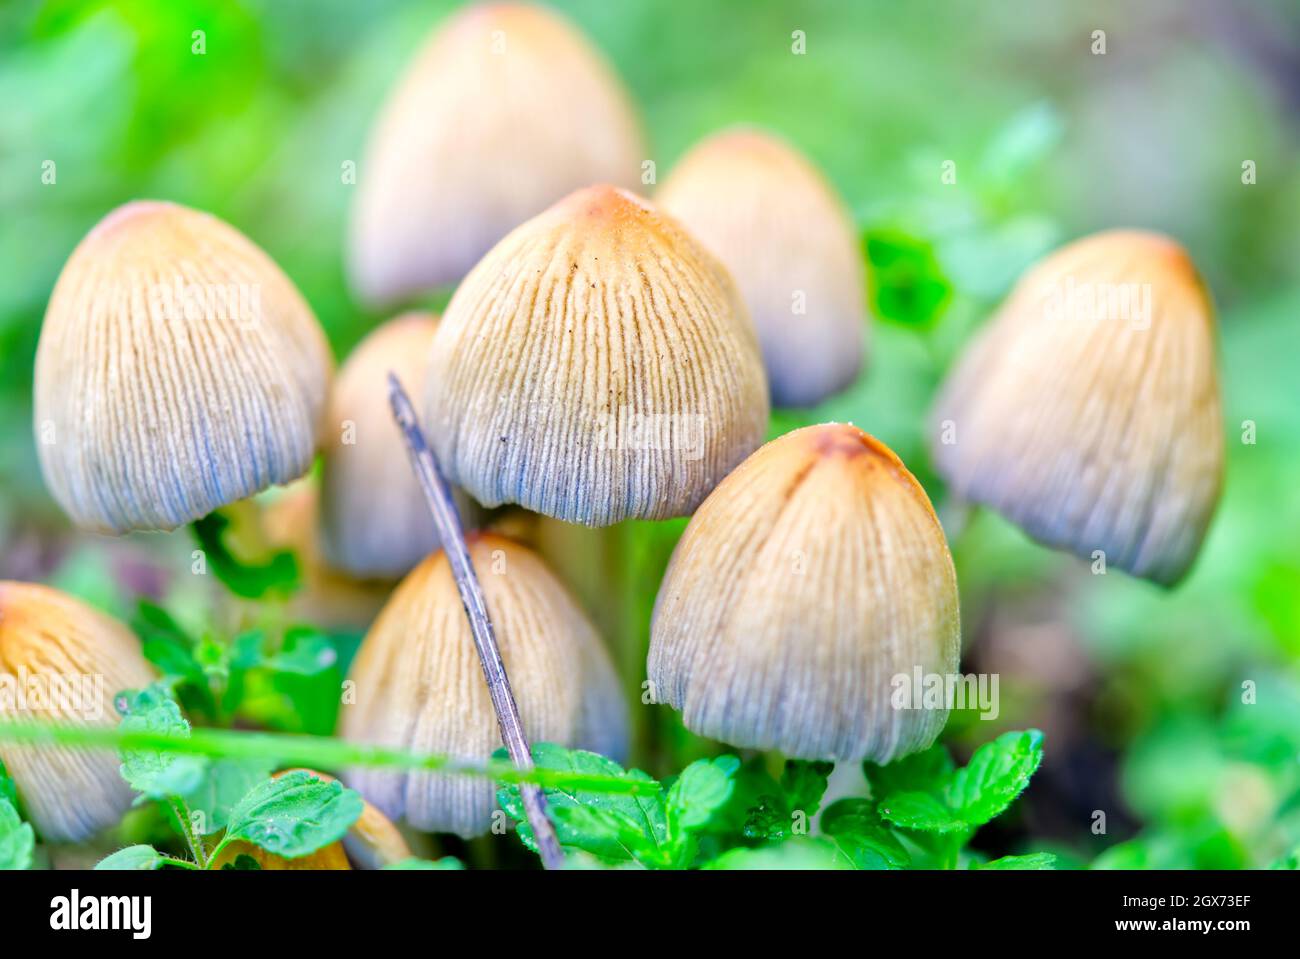 Coprinellus micaceus, Coprinus micaceus, commonly known as Glistening Inkcap, wild mushrooms Stock Photo